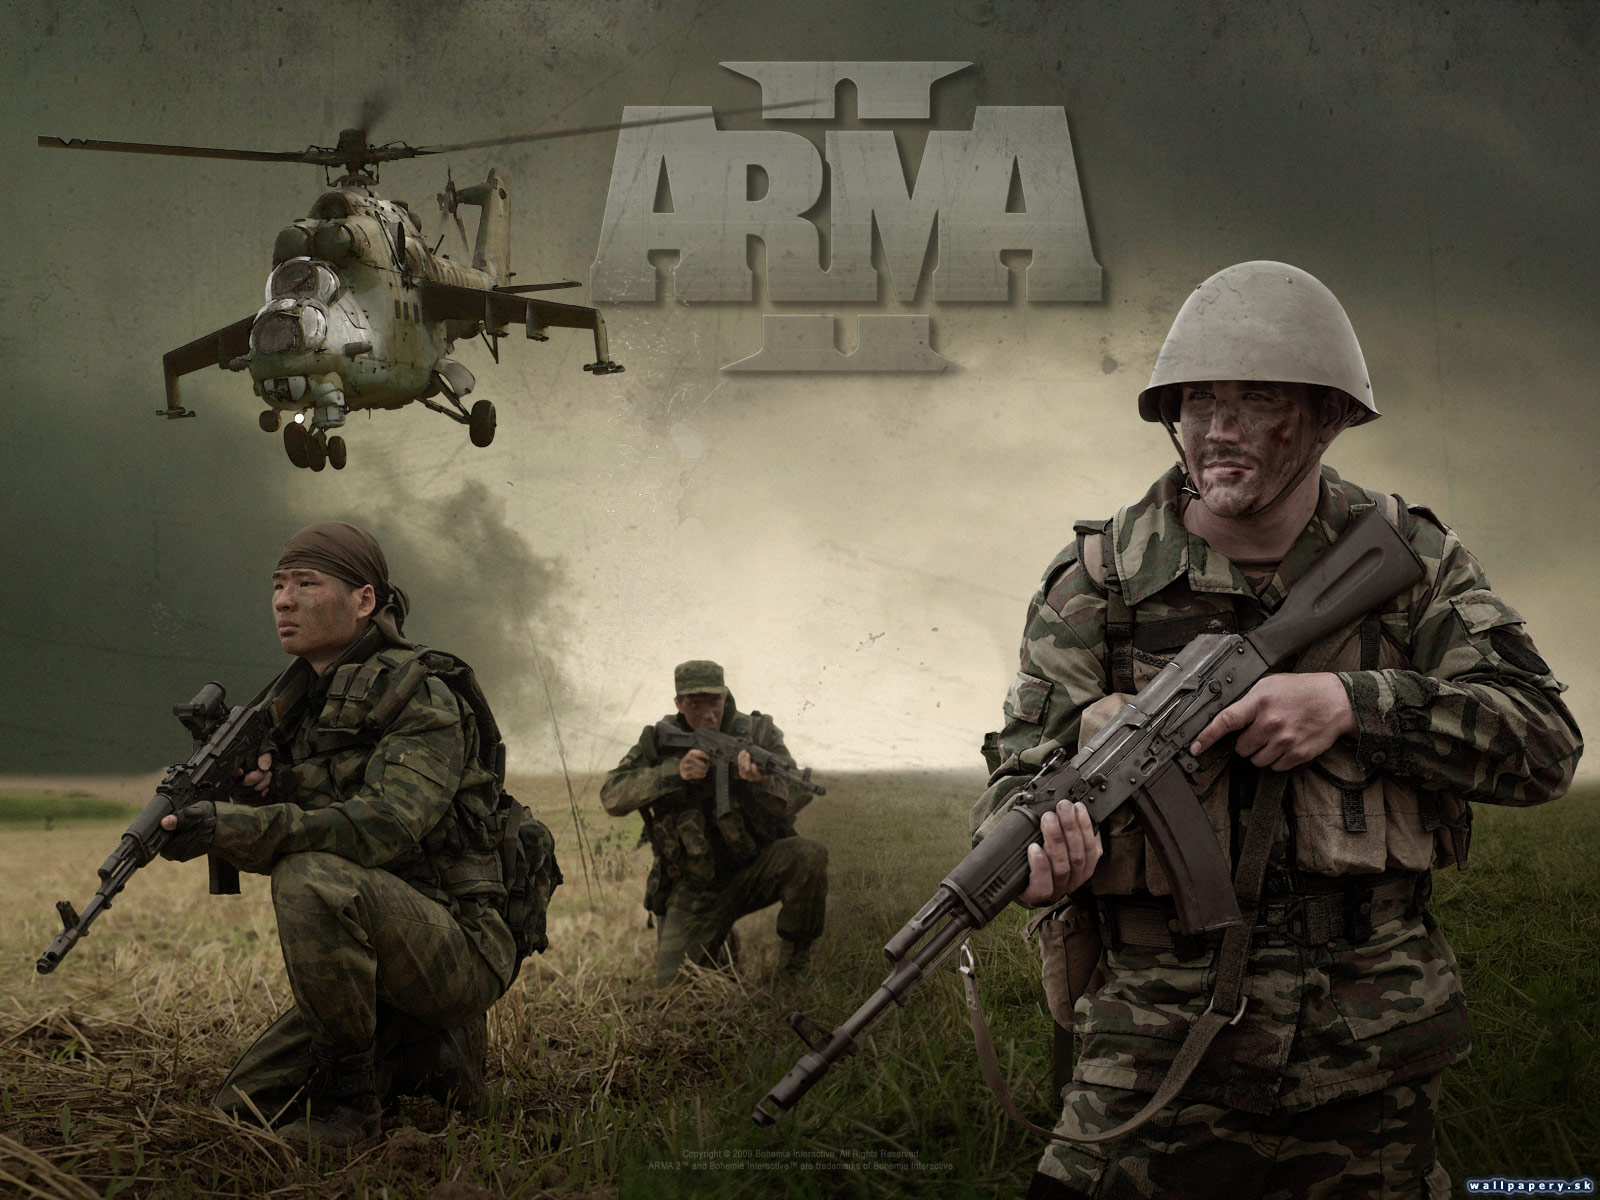 ARMA II - wallpaper 7